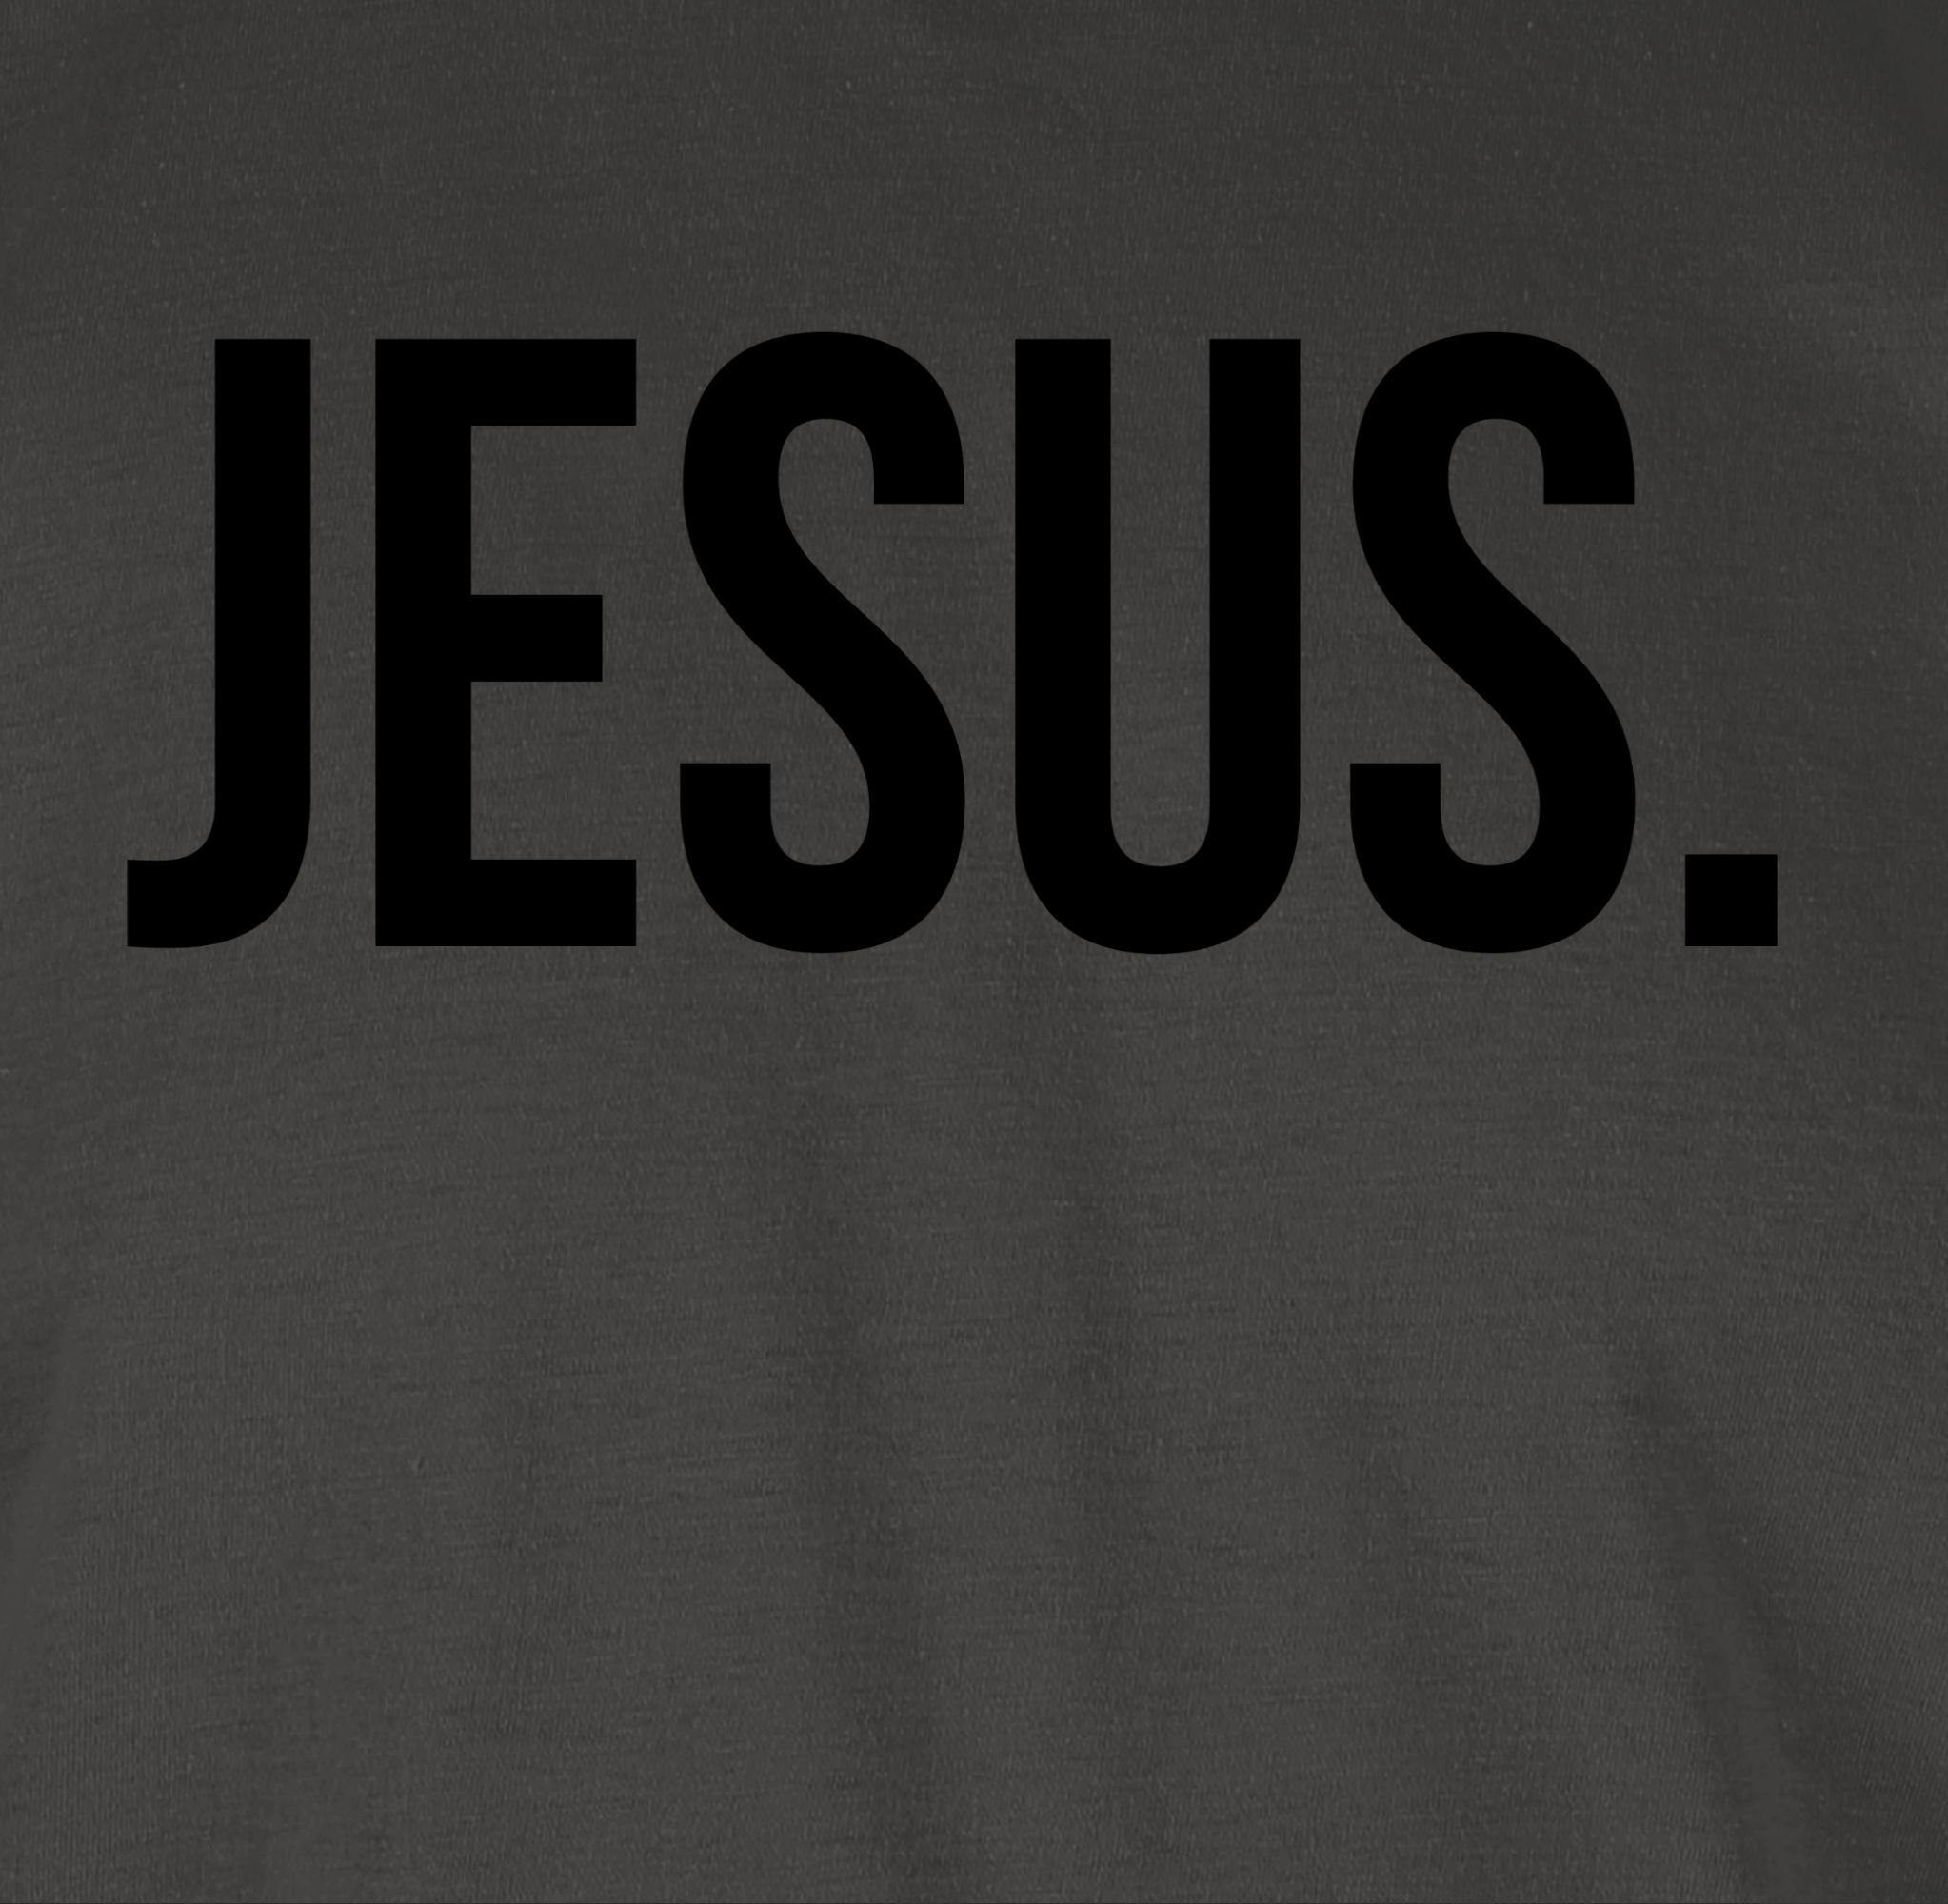 Statement Shirtracer 3 Christus T-Shirt Dunkelgrau Religion Jesus Glaube